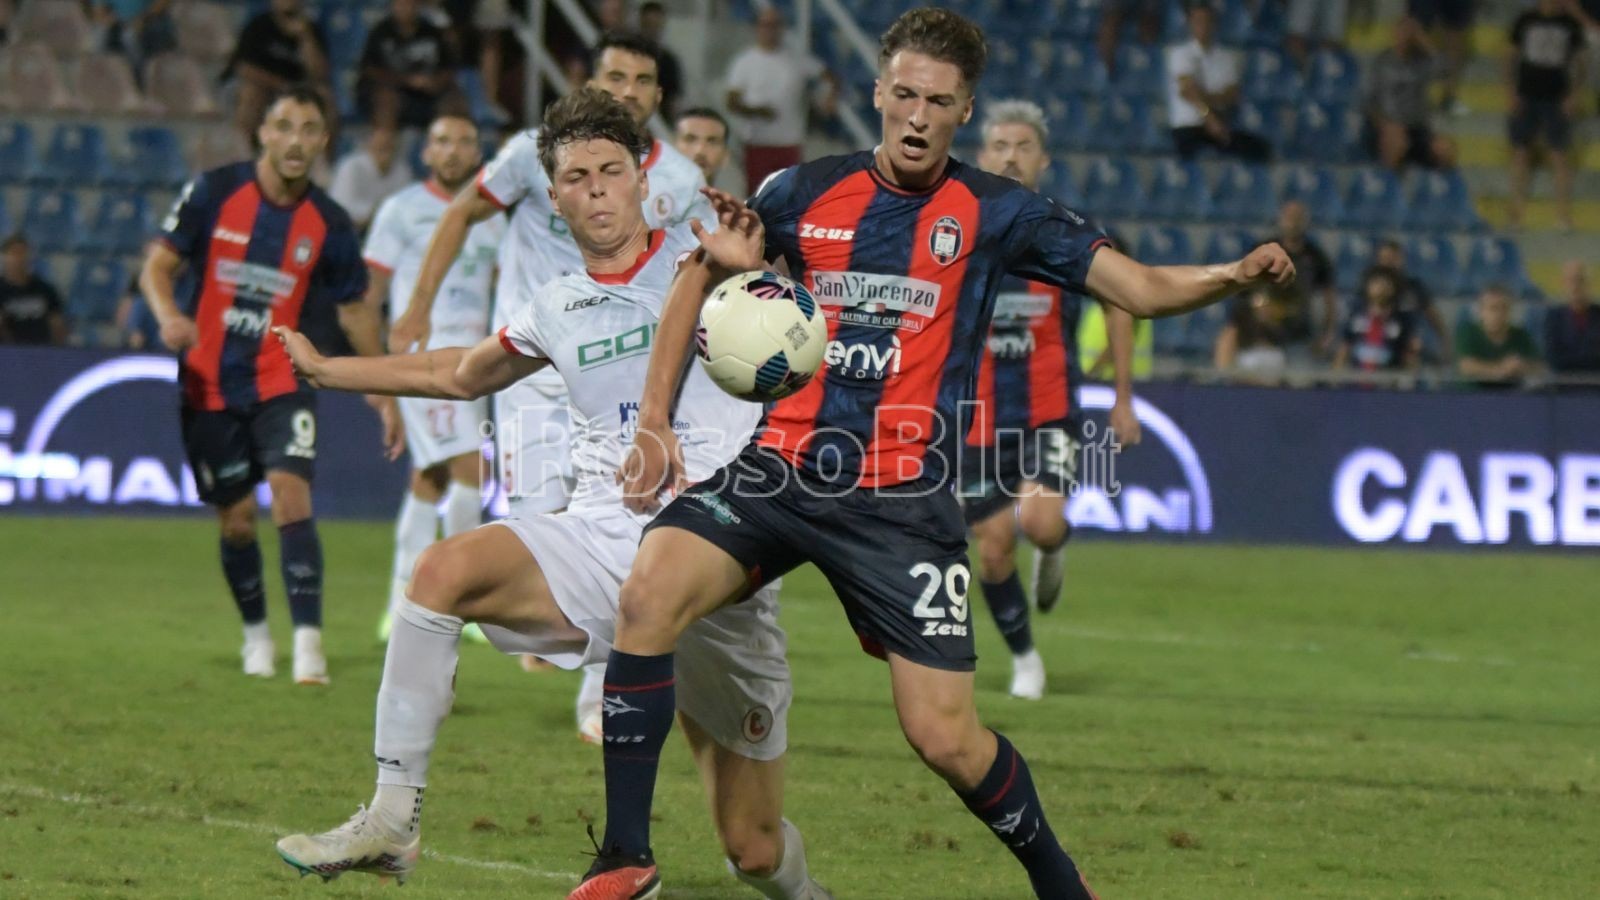 – 2 Giornata – Crotone vs Turris 2-3 – Cantisani Raffaele – (Rosito Andrea 10.09.2023)